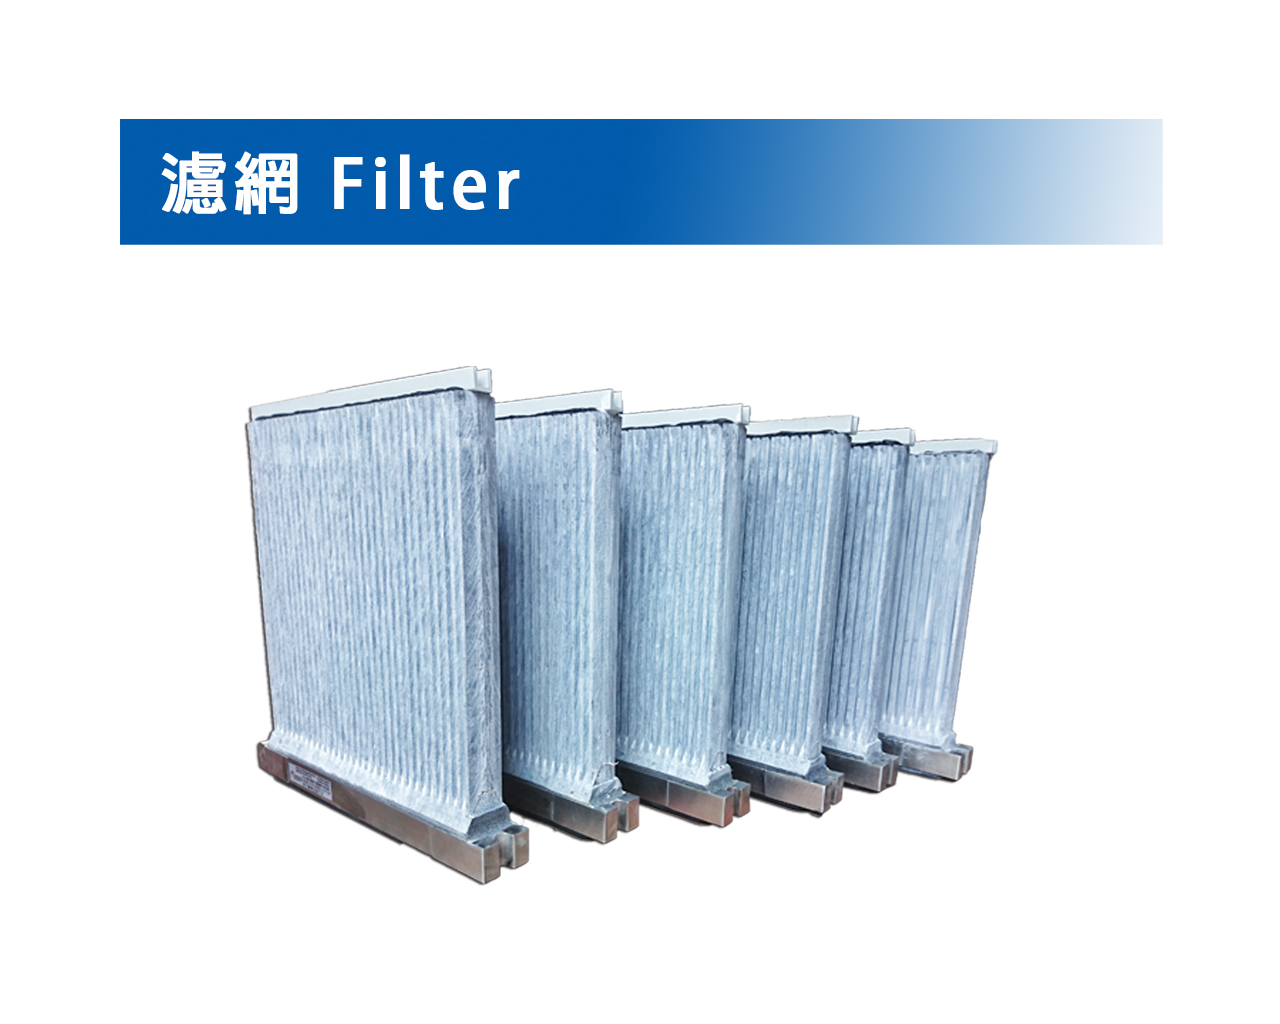 Filter [Made In Germany] (GR-EC)